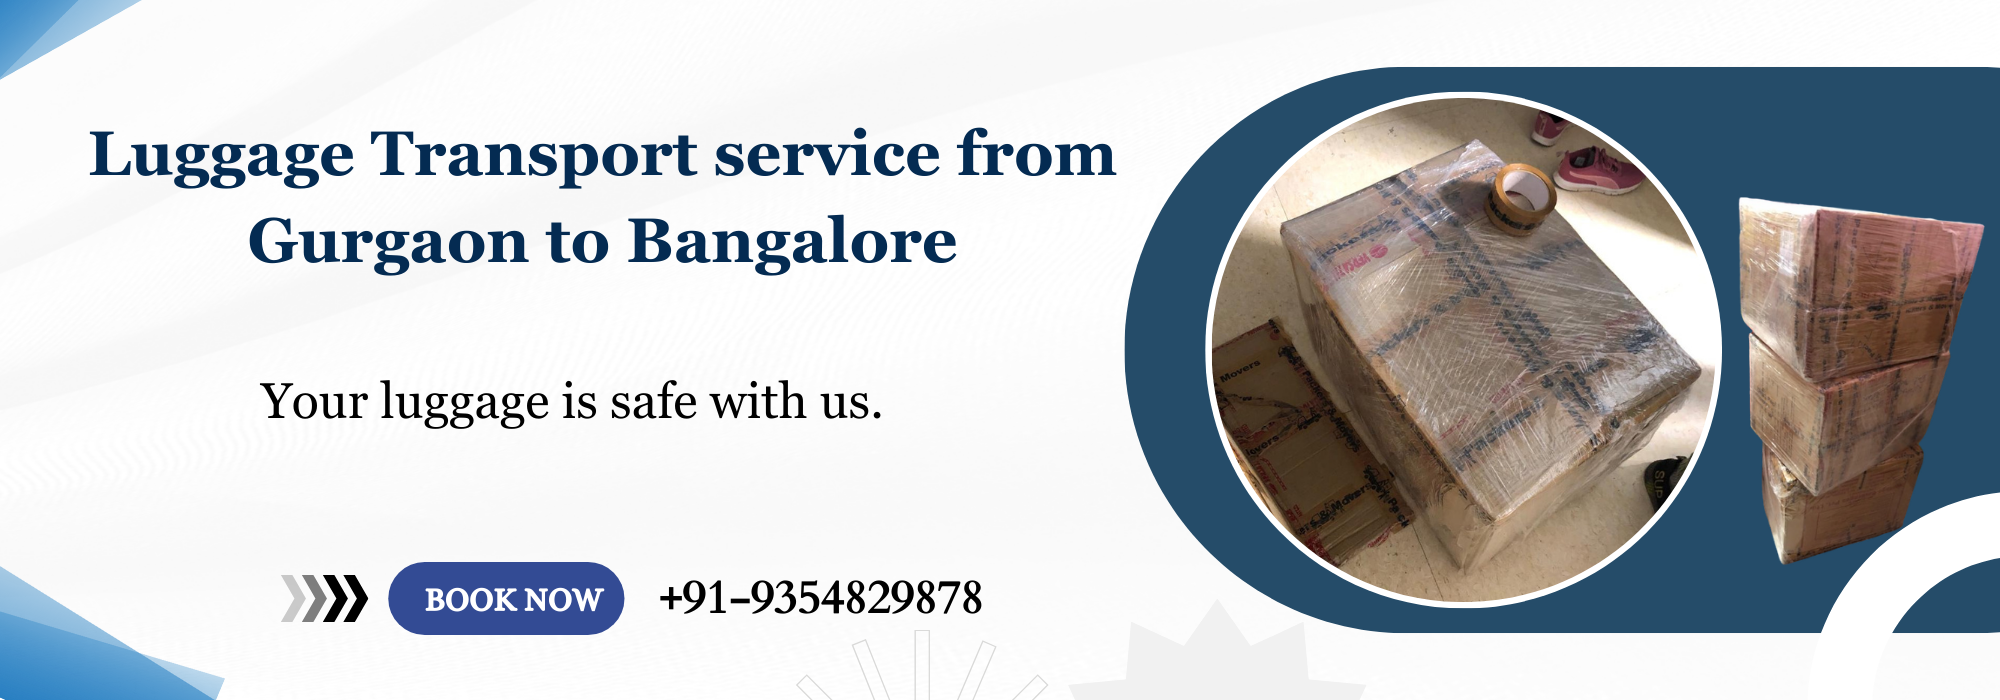 Luggage Transport Service from Gurgaon to Bangalore